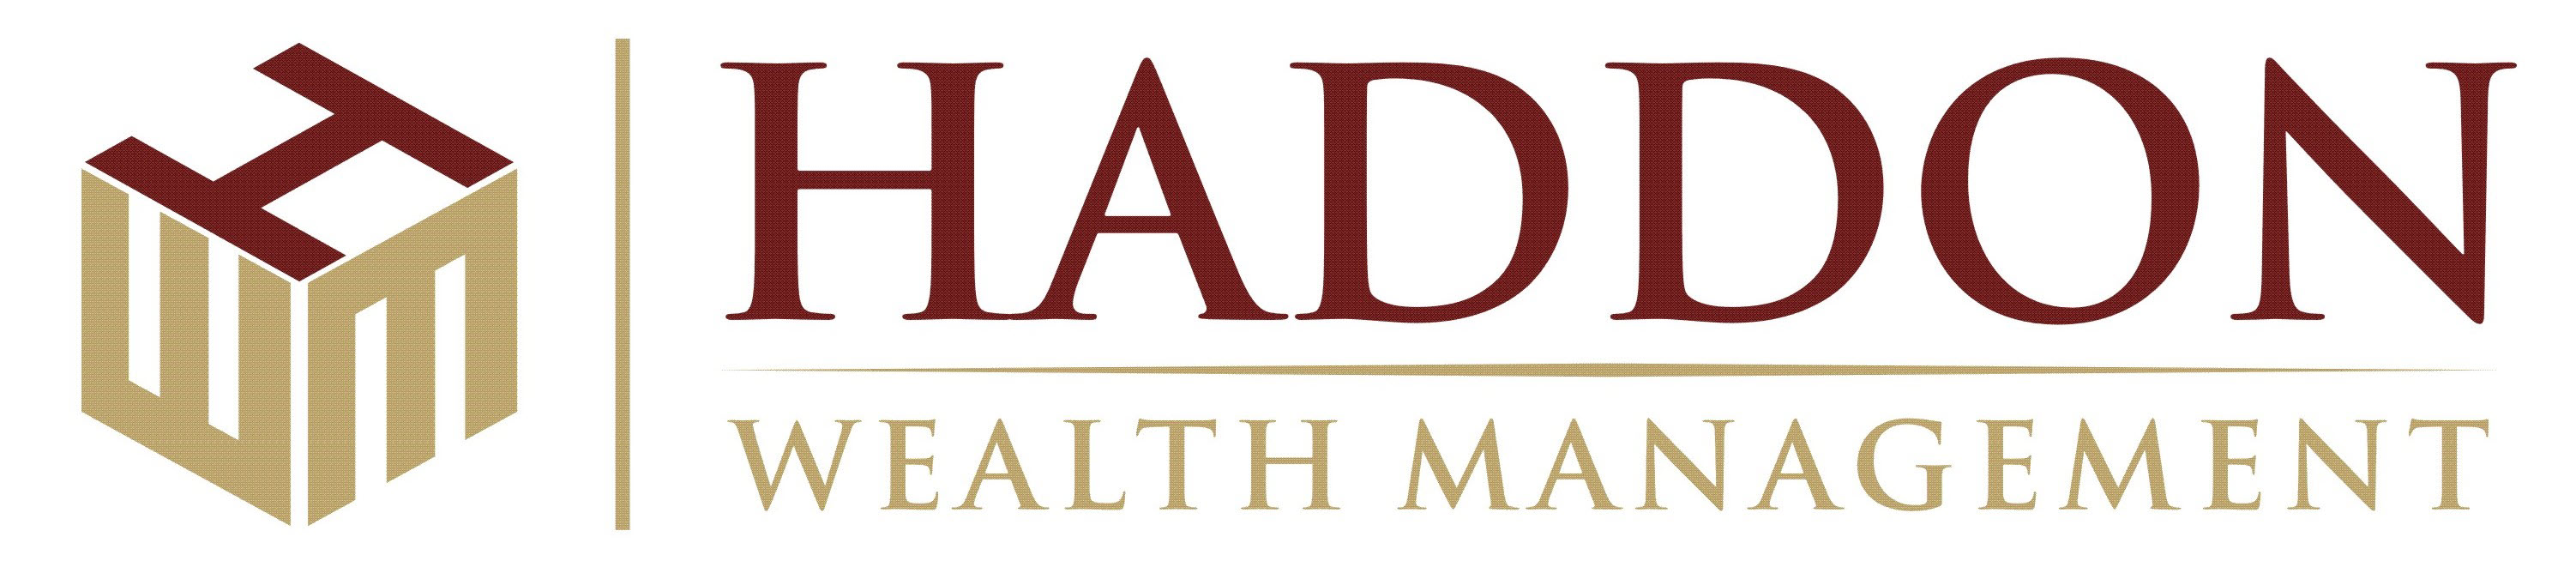 Haddon Wealth Management logo